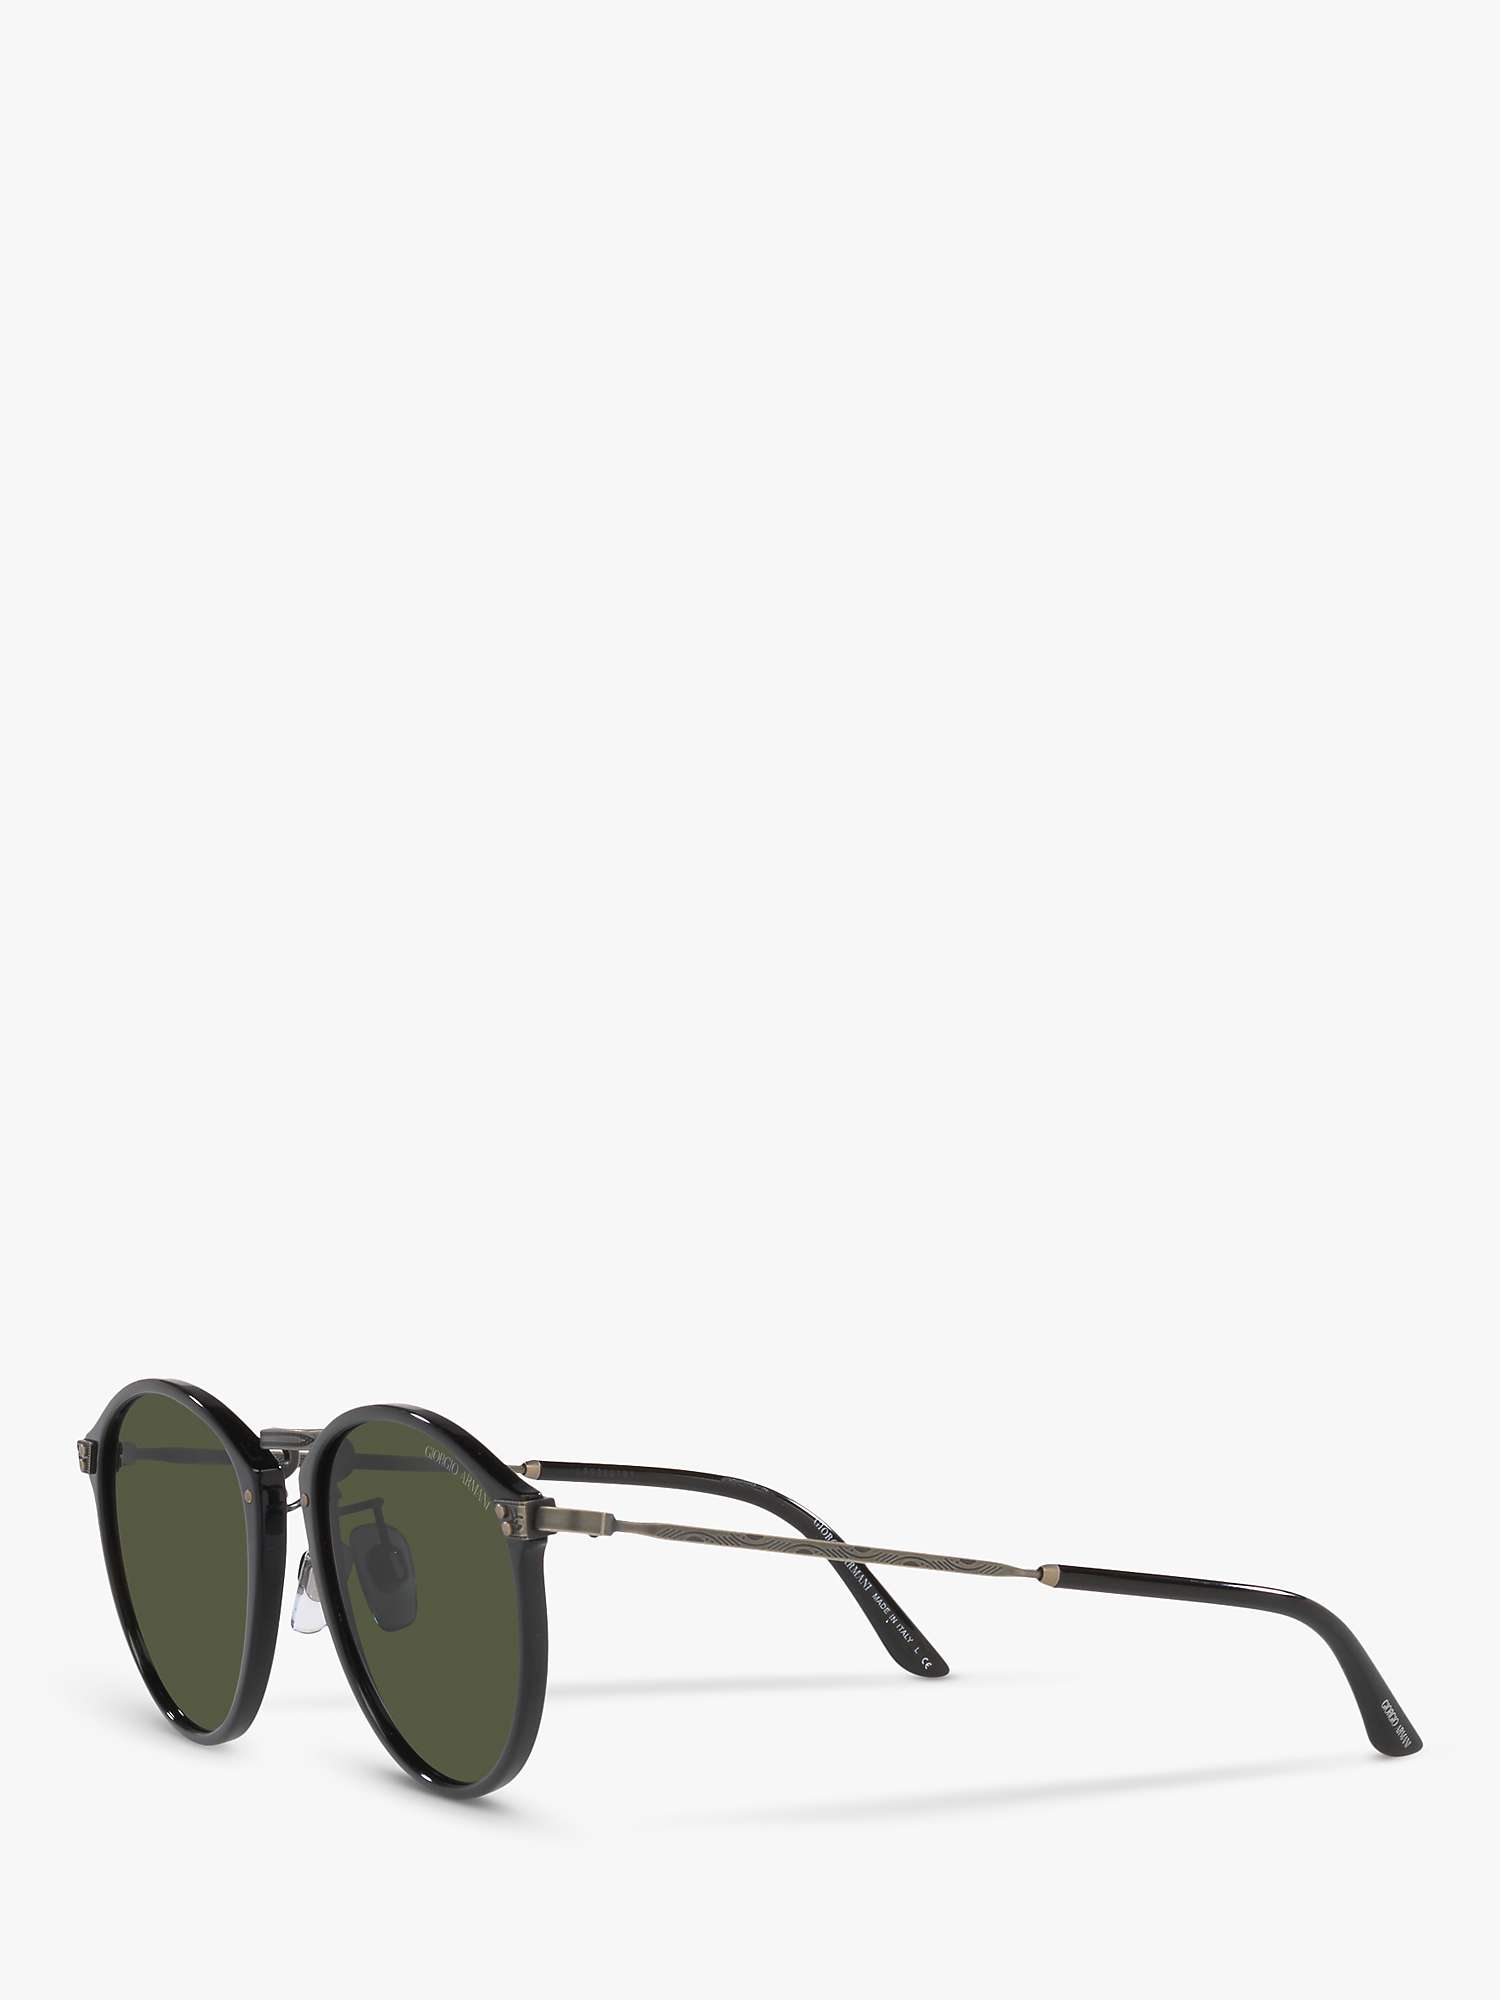 Buy Giorgio Armani AR 318SM Men's Oval Sunglasses, Black/Green Online at johnlewis.com